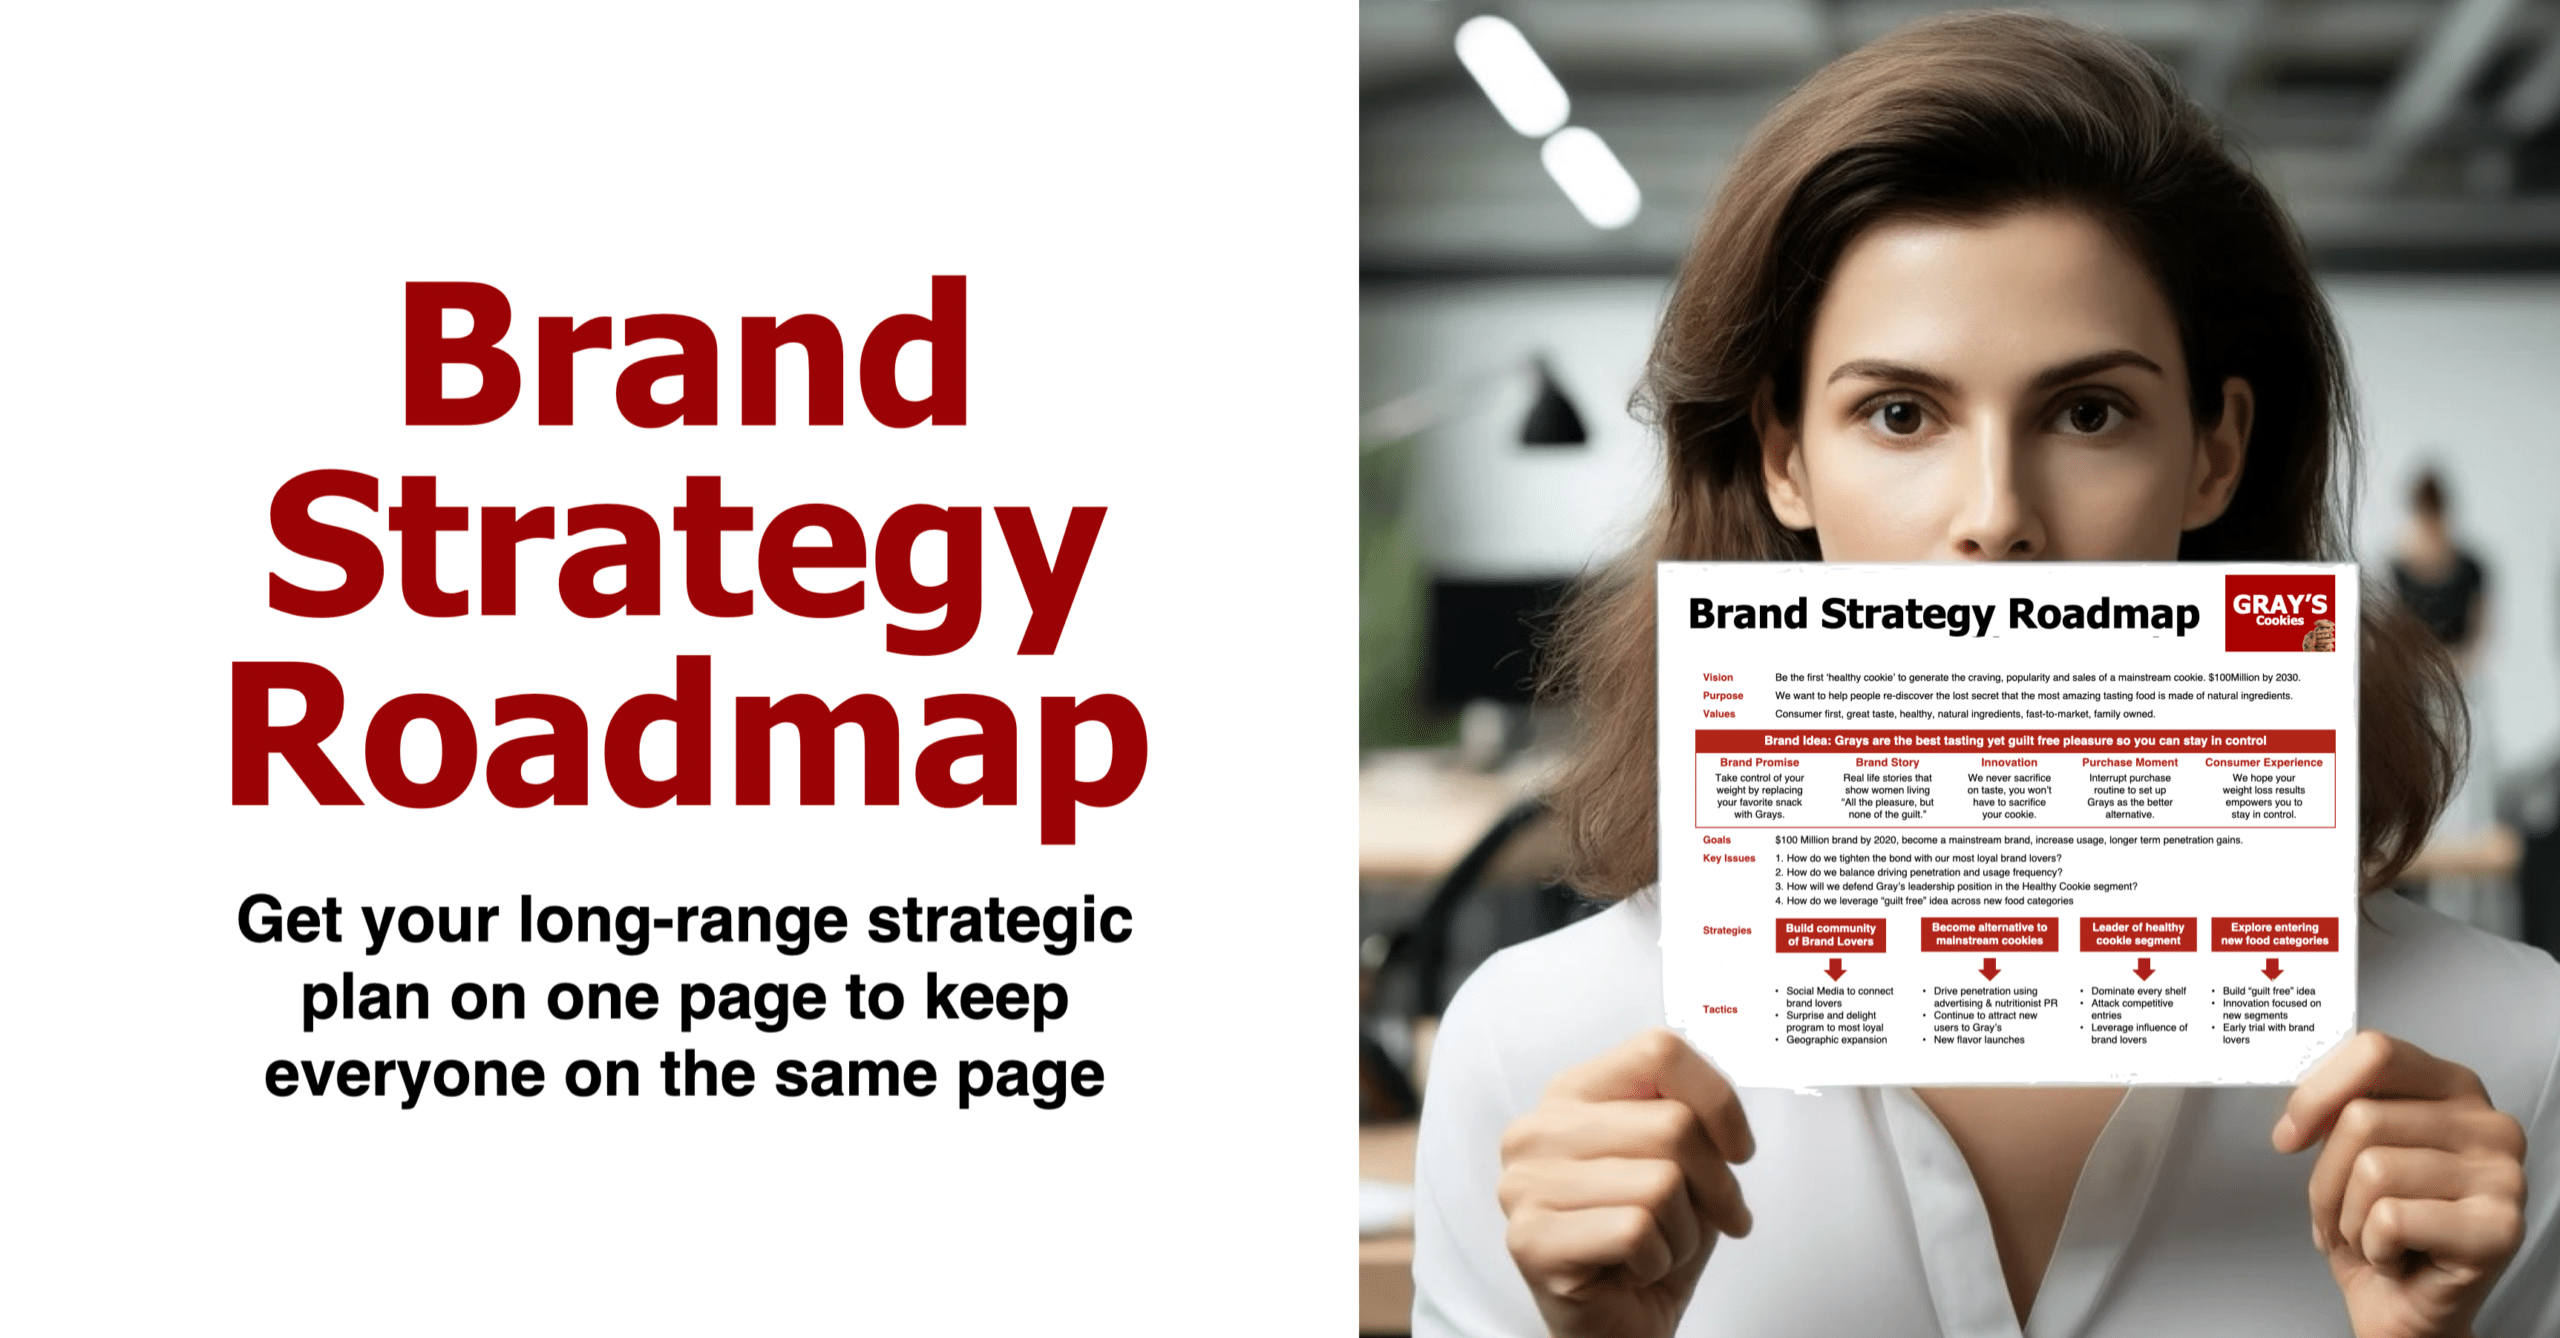 Brand Strategy Roadmap - Long-range Strategic Plan